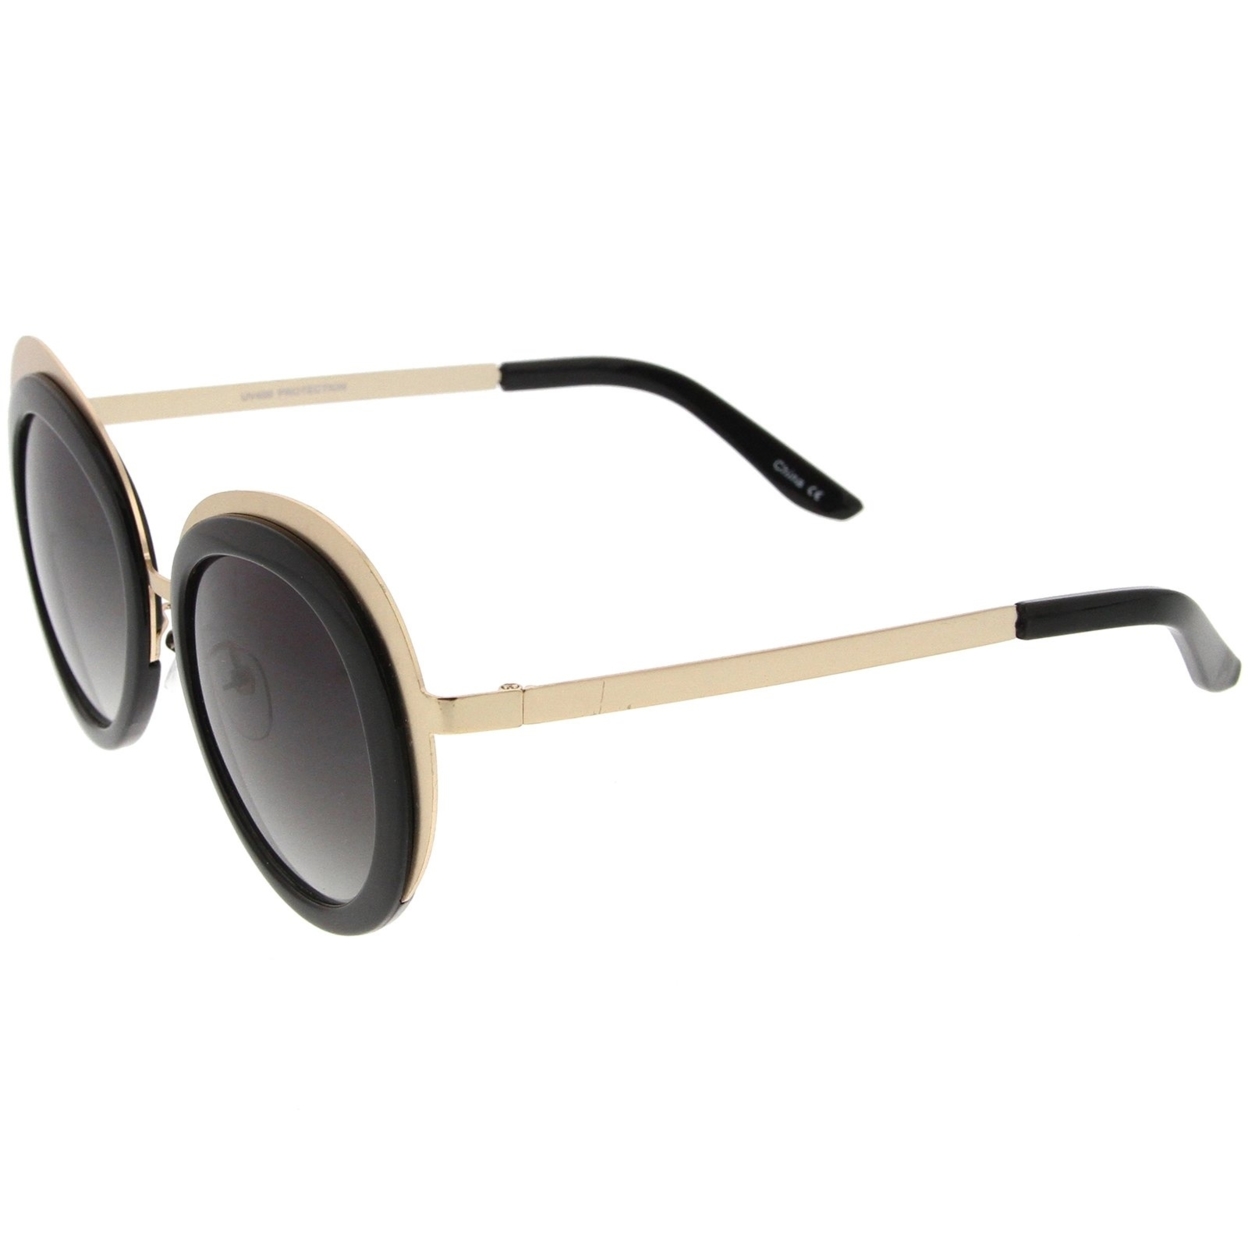 Women's Oversize Two-Tone Metal Frame Border Round Sunglasses 50mm - Gold-White / Amber